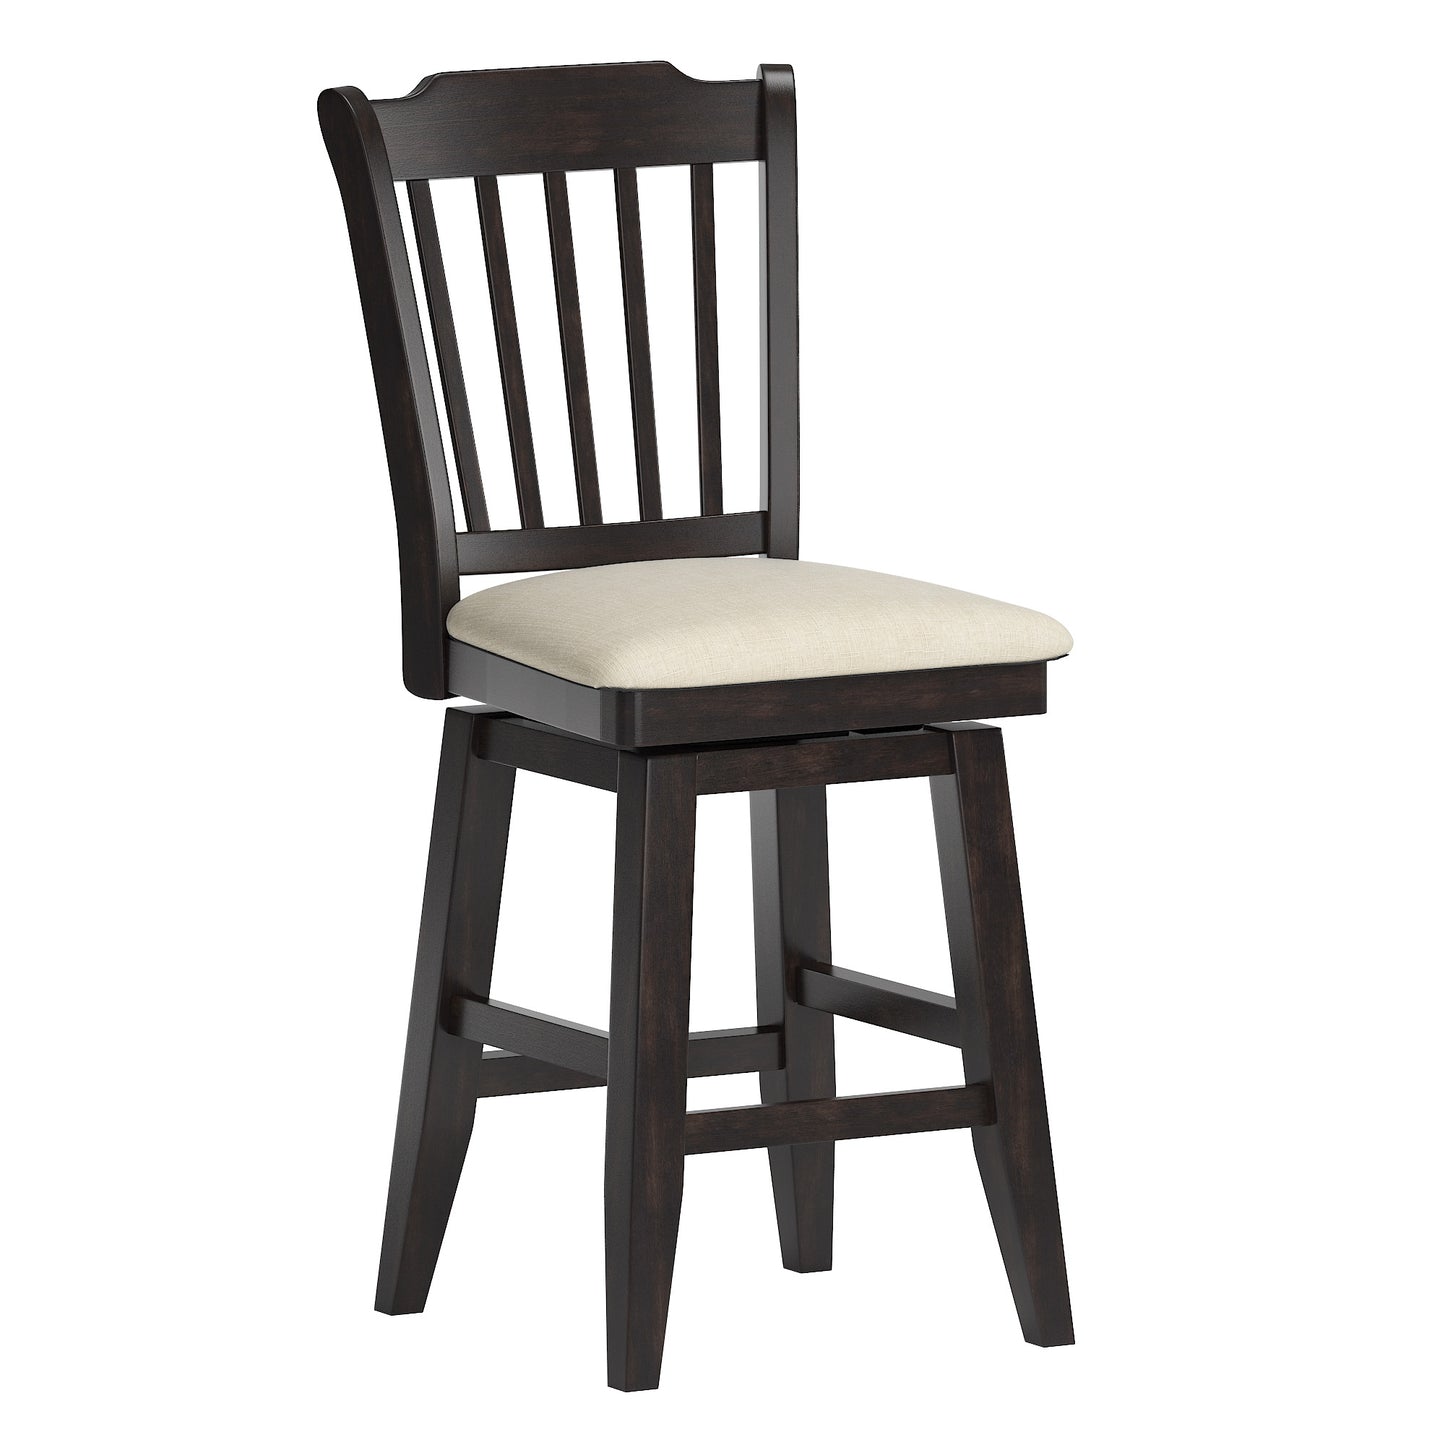 Slat Back Counter Height Wood Swivel Chair - Antique Black Finish